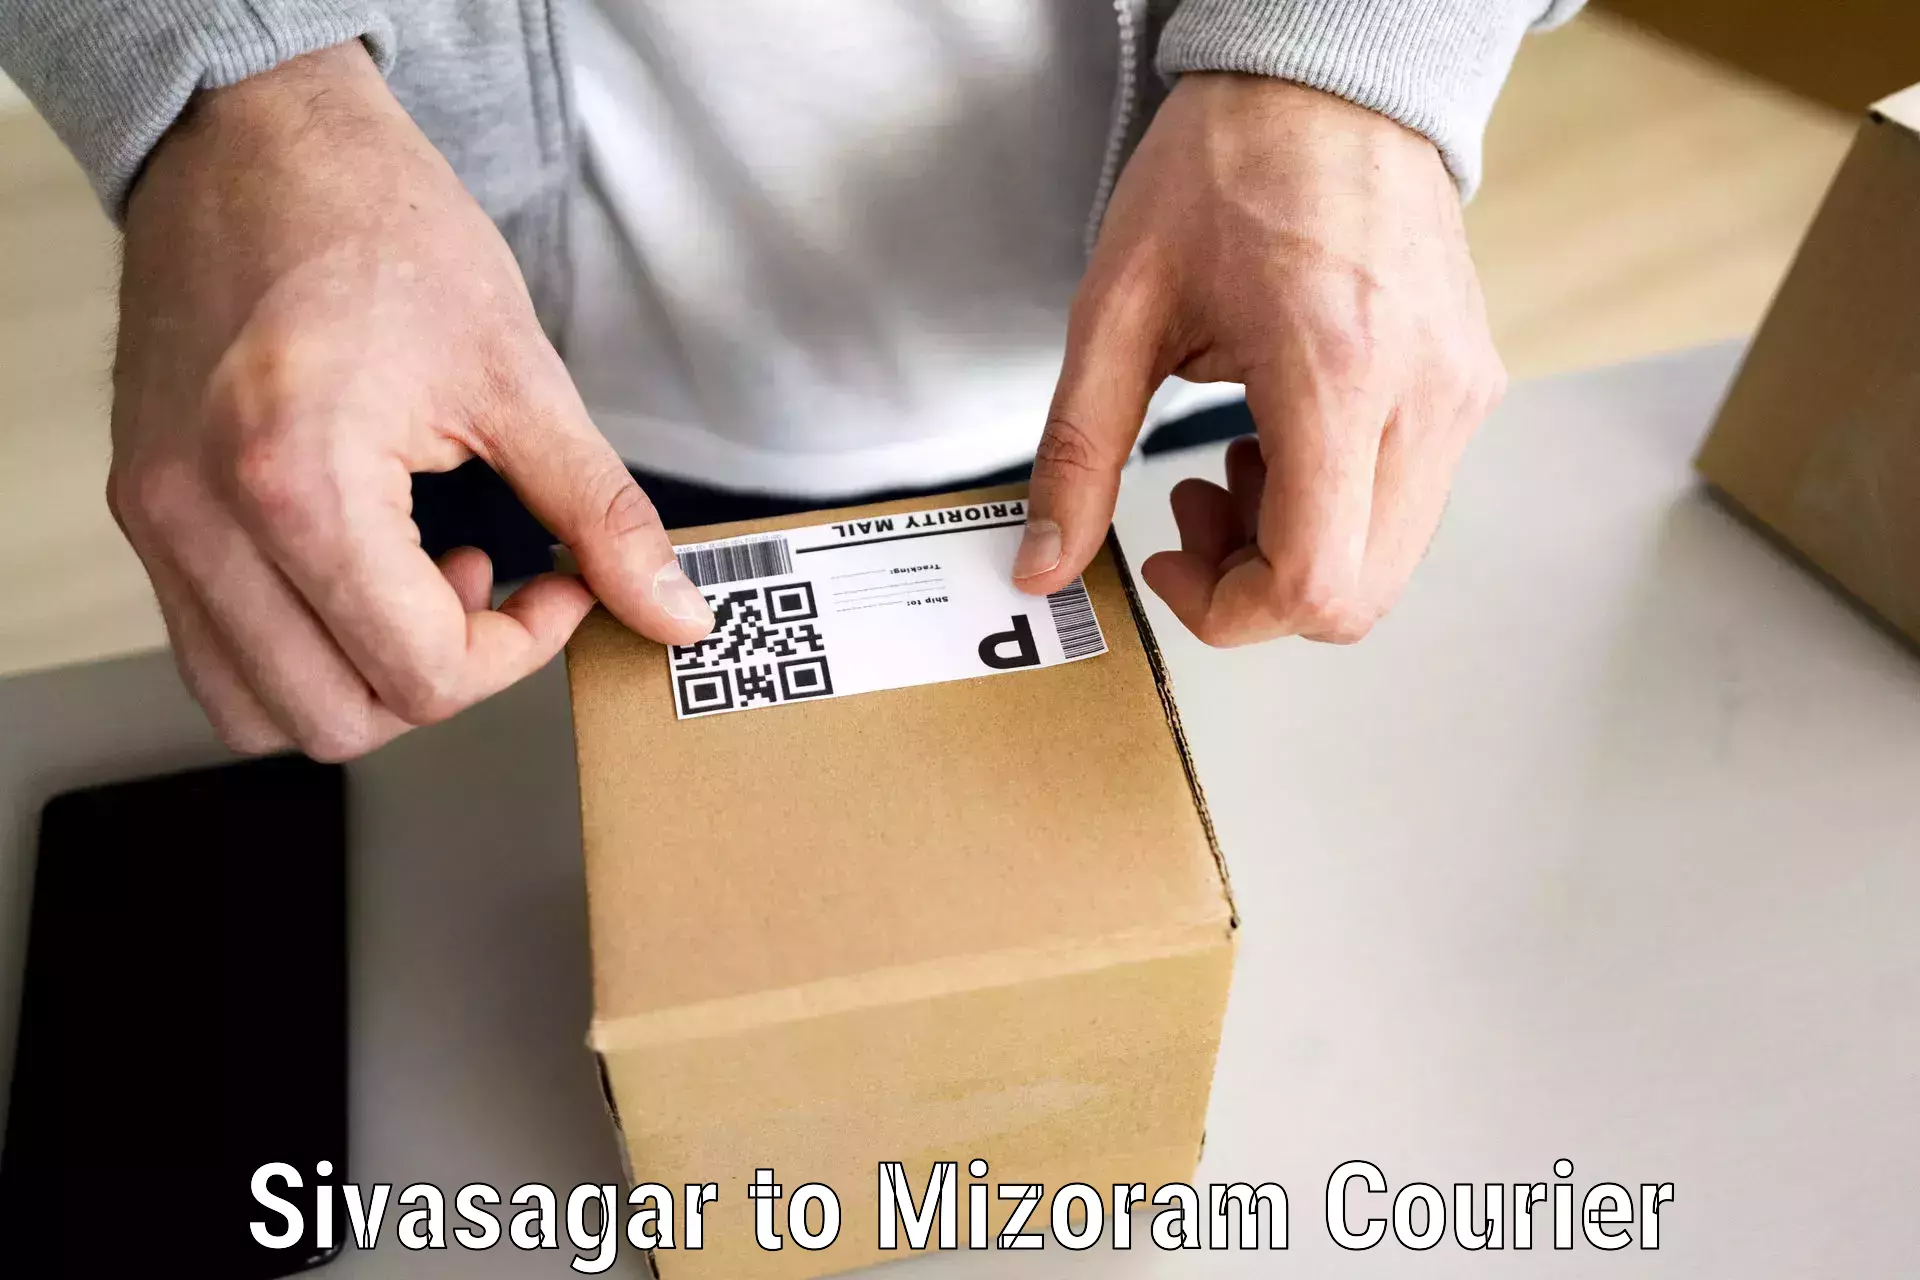 Furniture delivery service Sivasagar to Mizoram